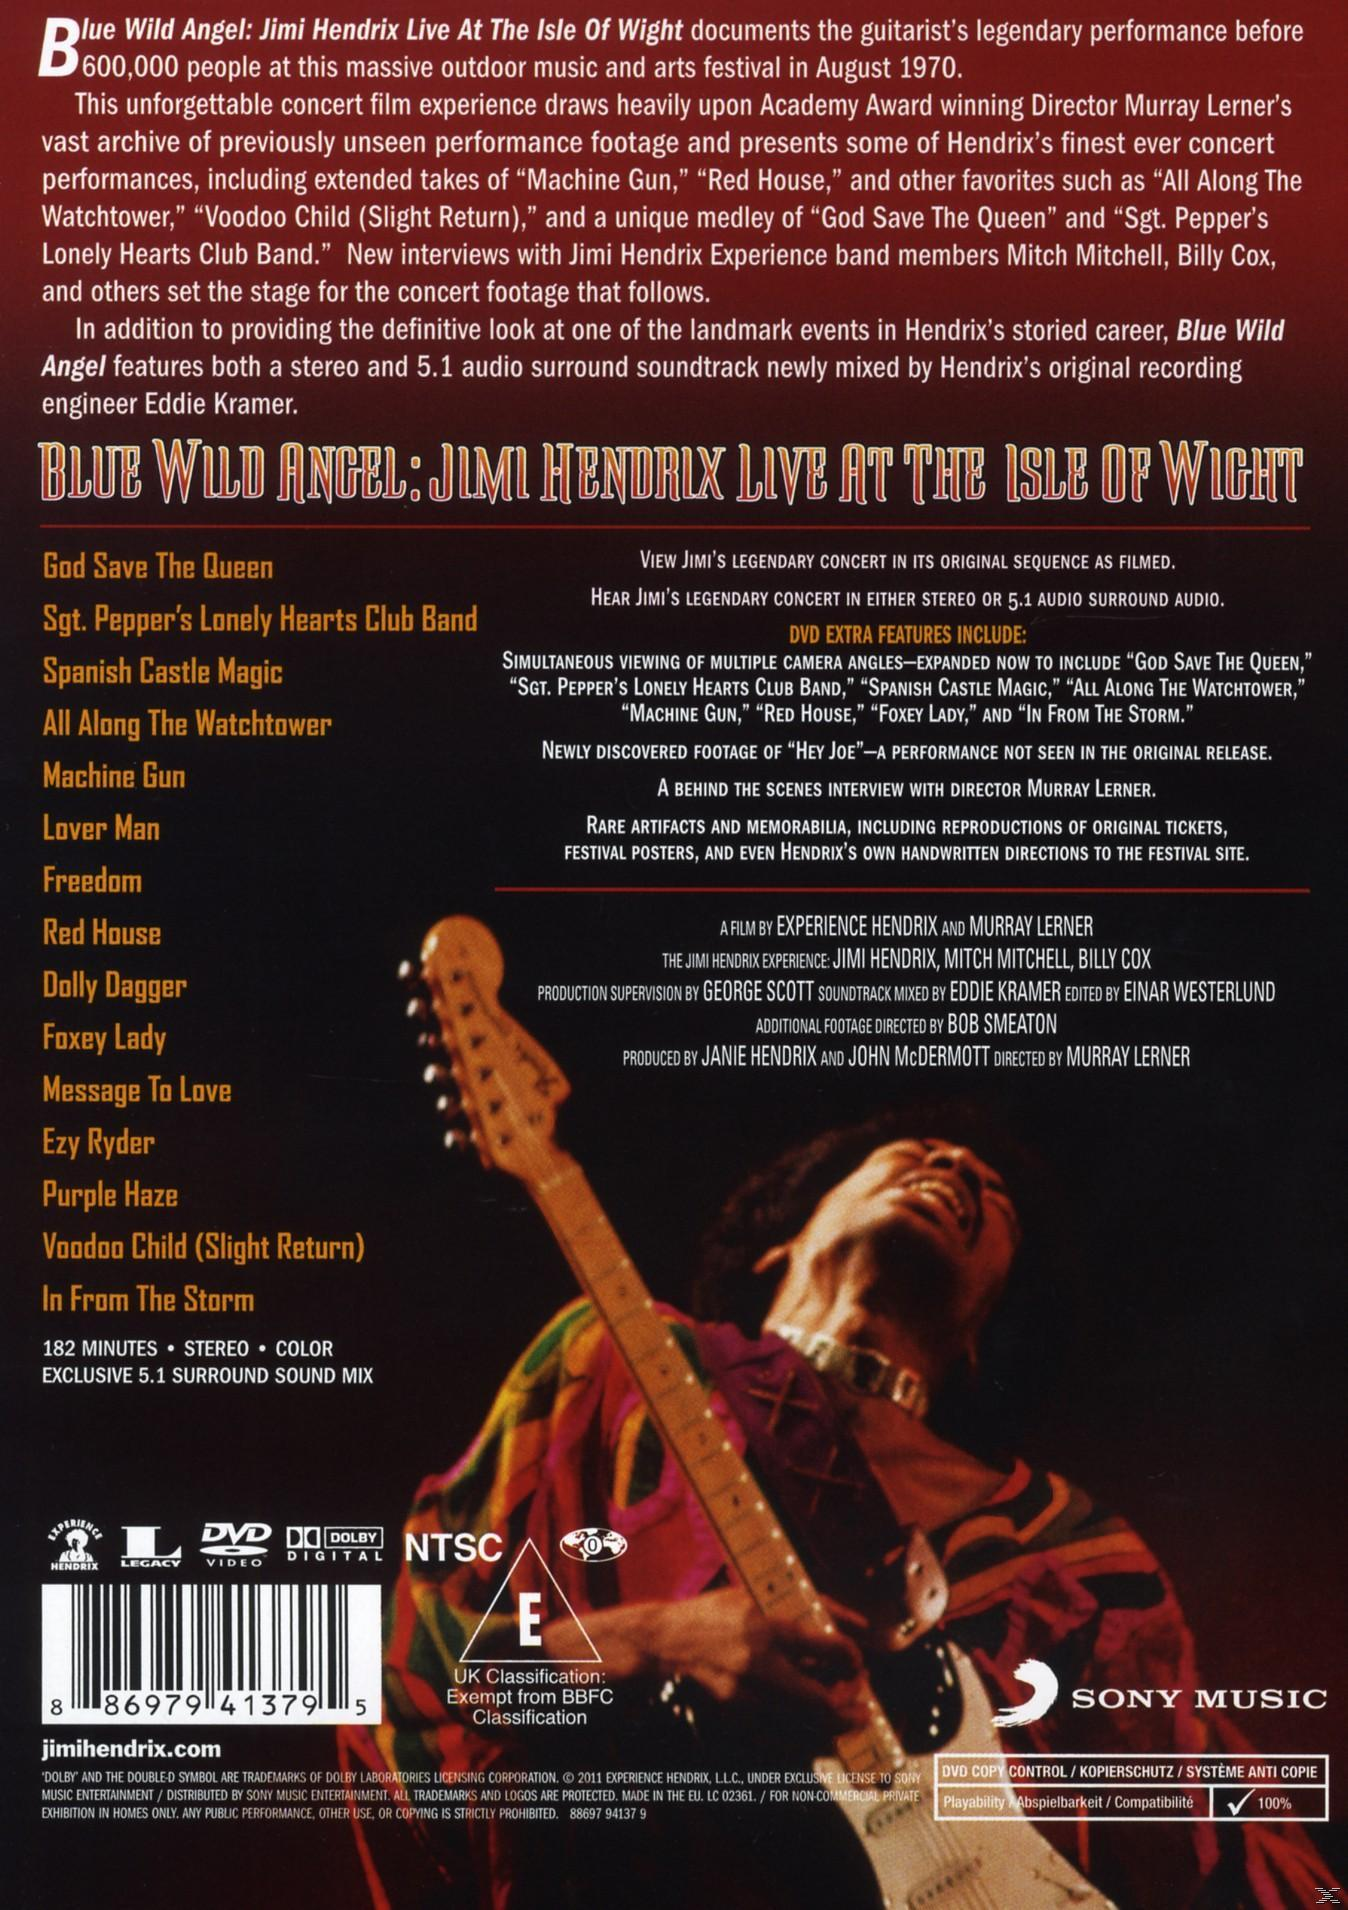 Jimi Hendrix - - ISLE BLUE LIVE AT (DVD) - ANGEL WIGHT WILD OF